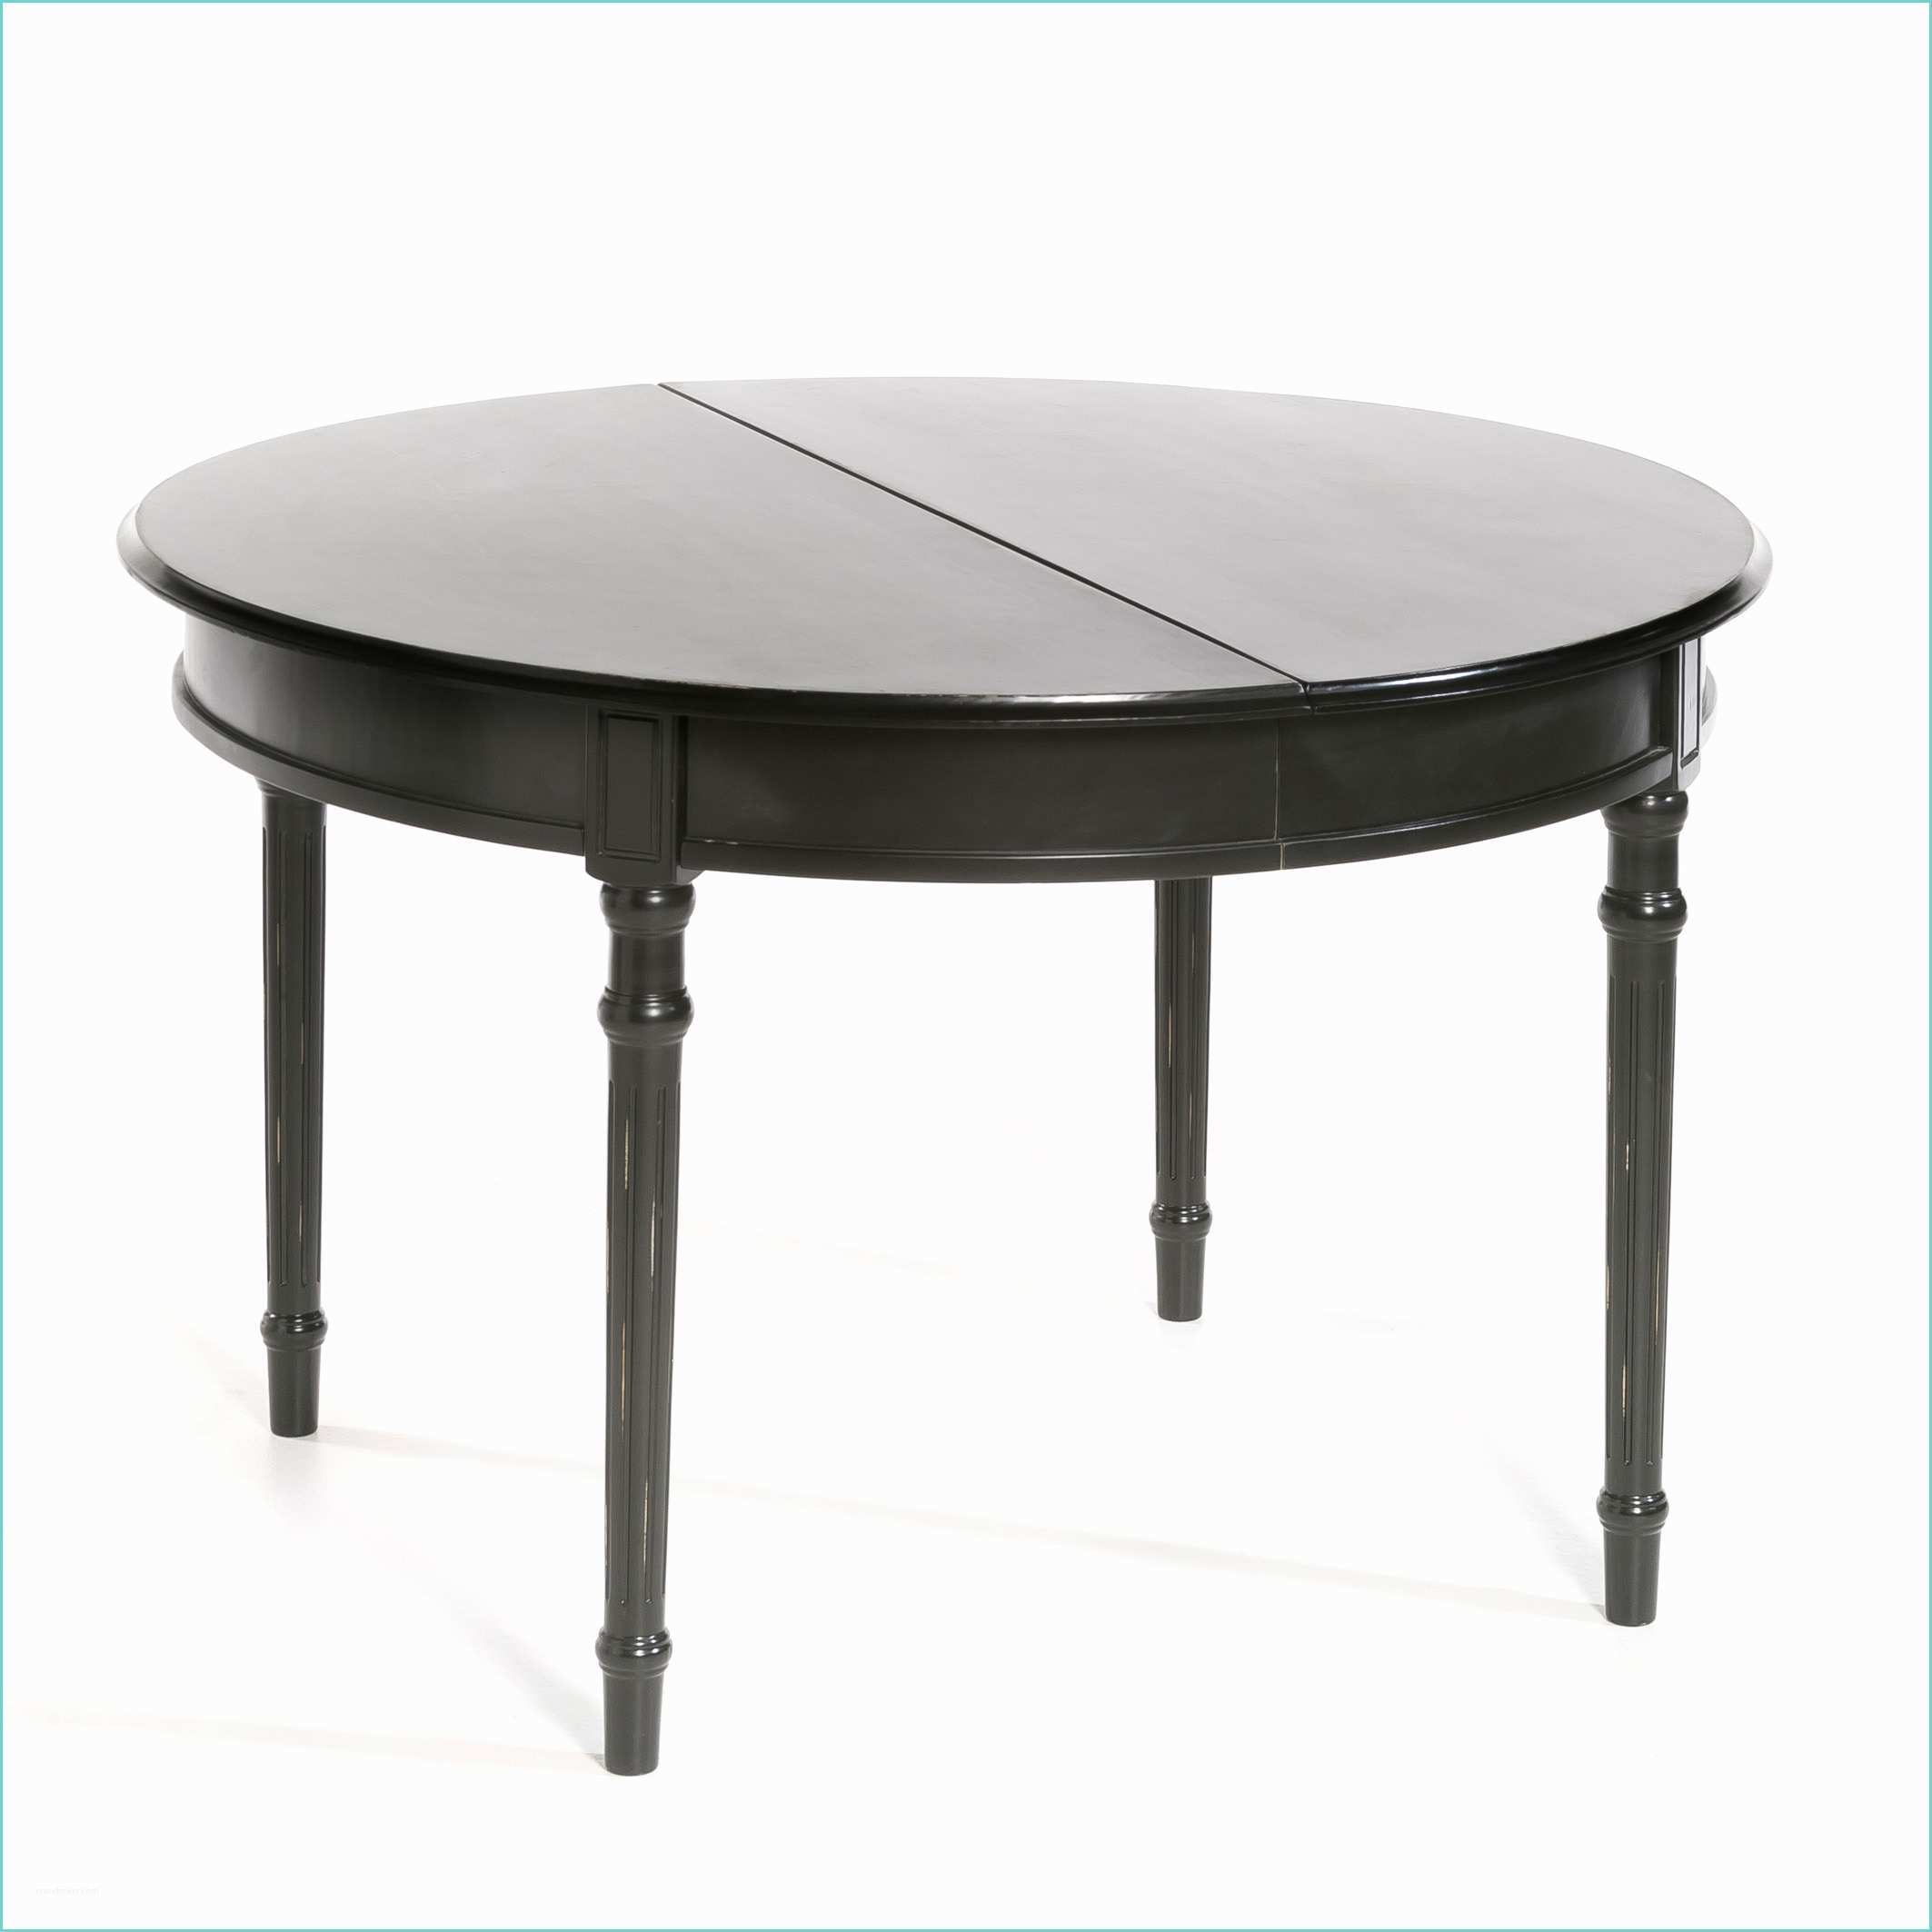 Table Ronde Design Avec Rallonge Table Repas Ronde Extensible Table Ronde Pas Cher